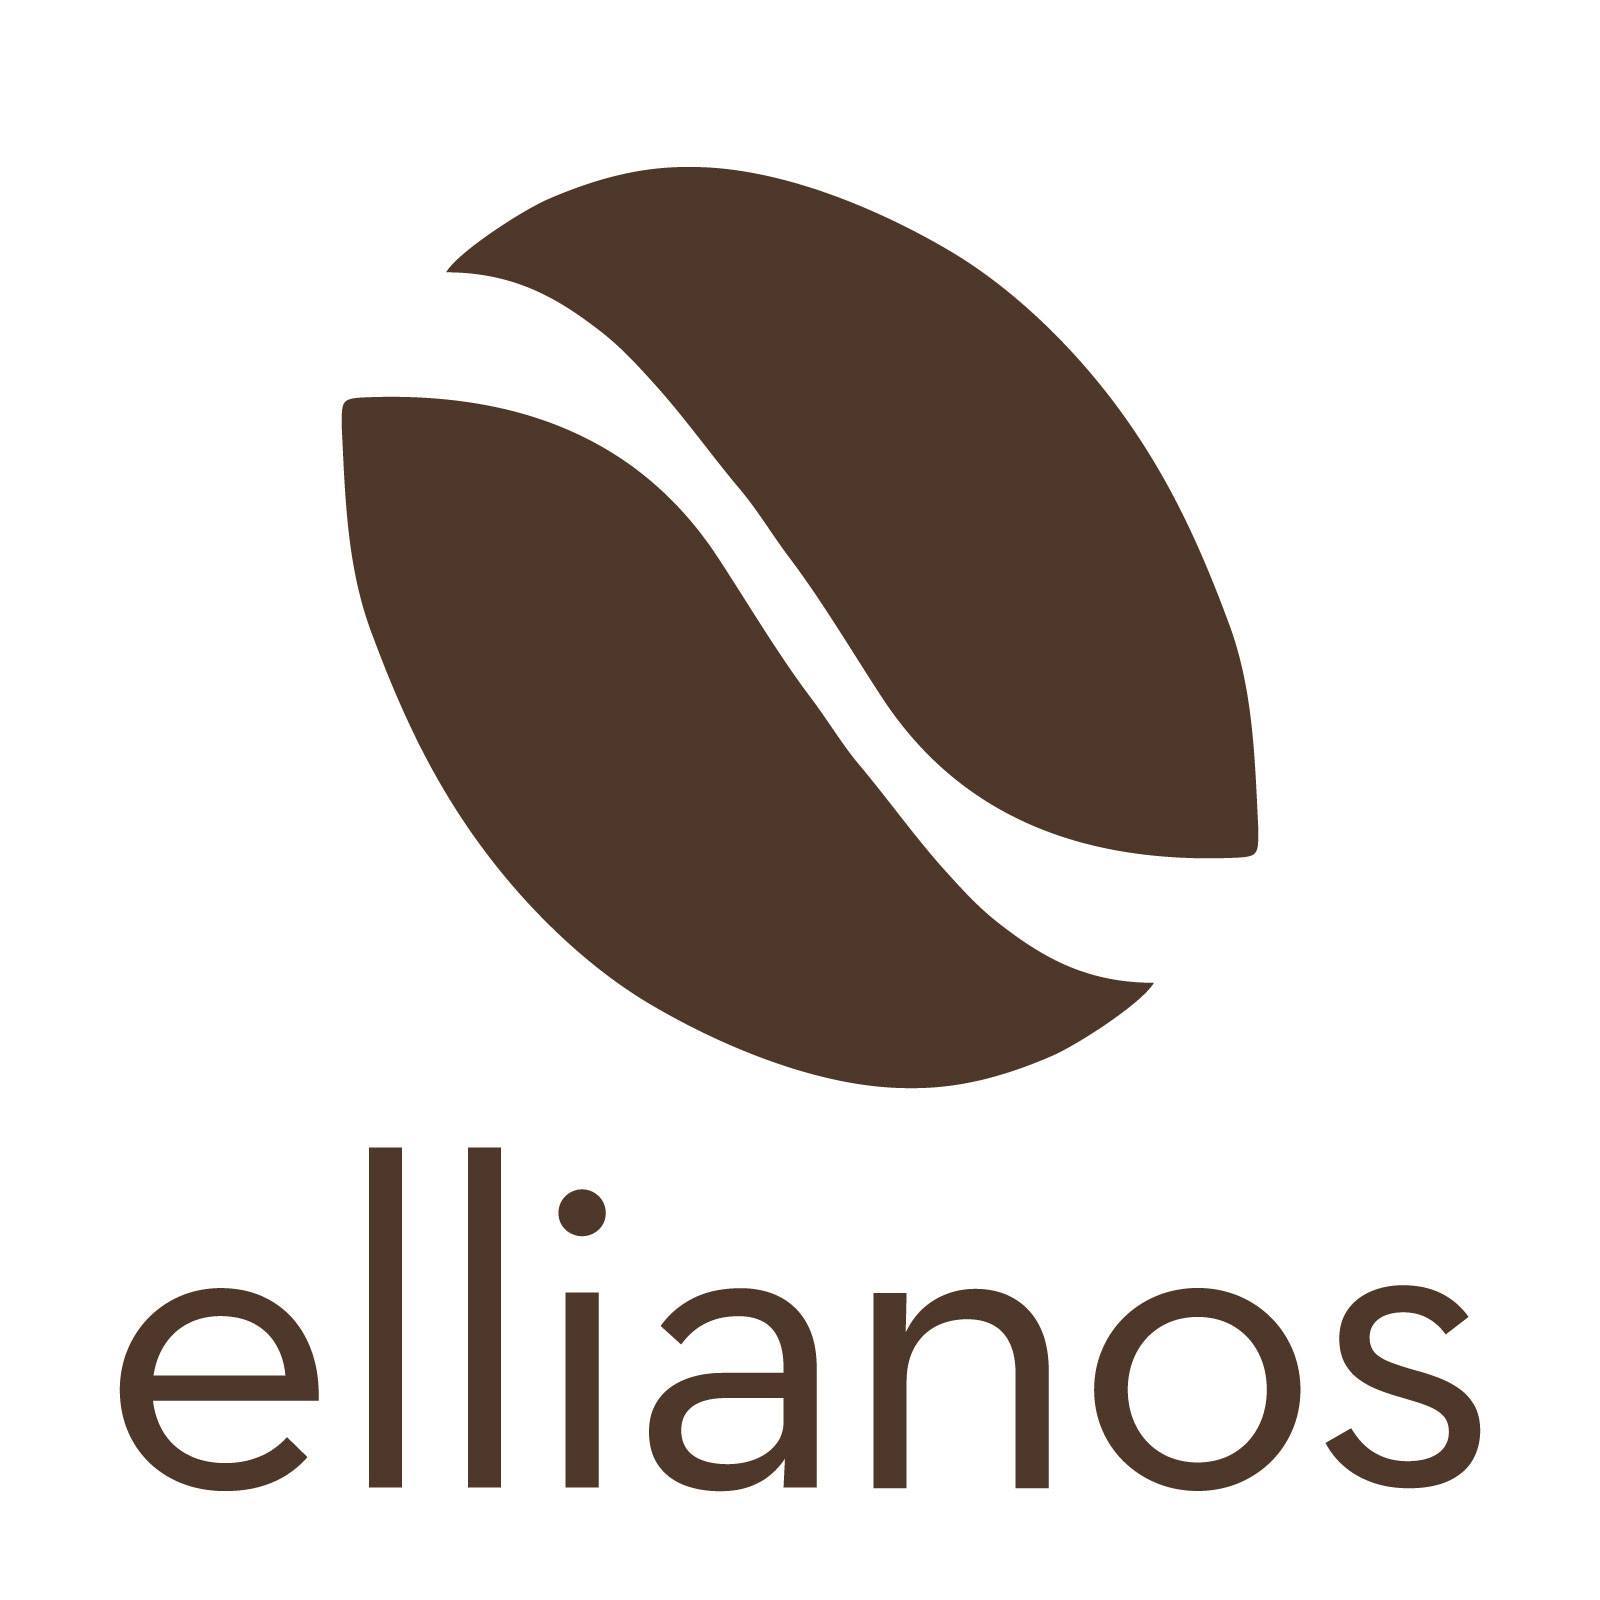 ELLIANOS-LOGO.jpg